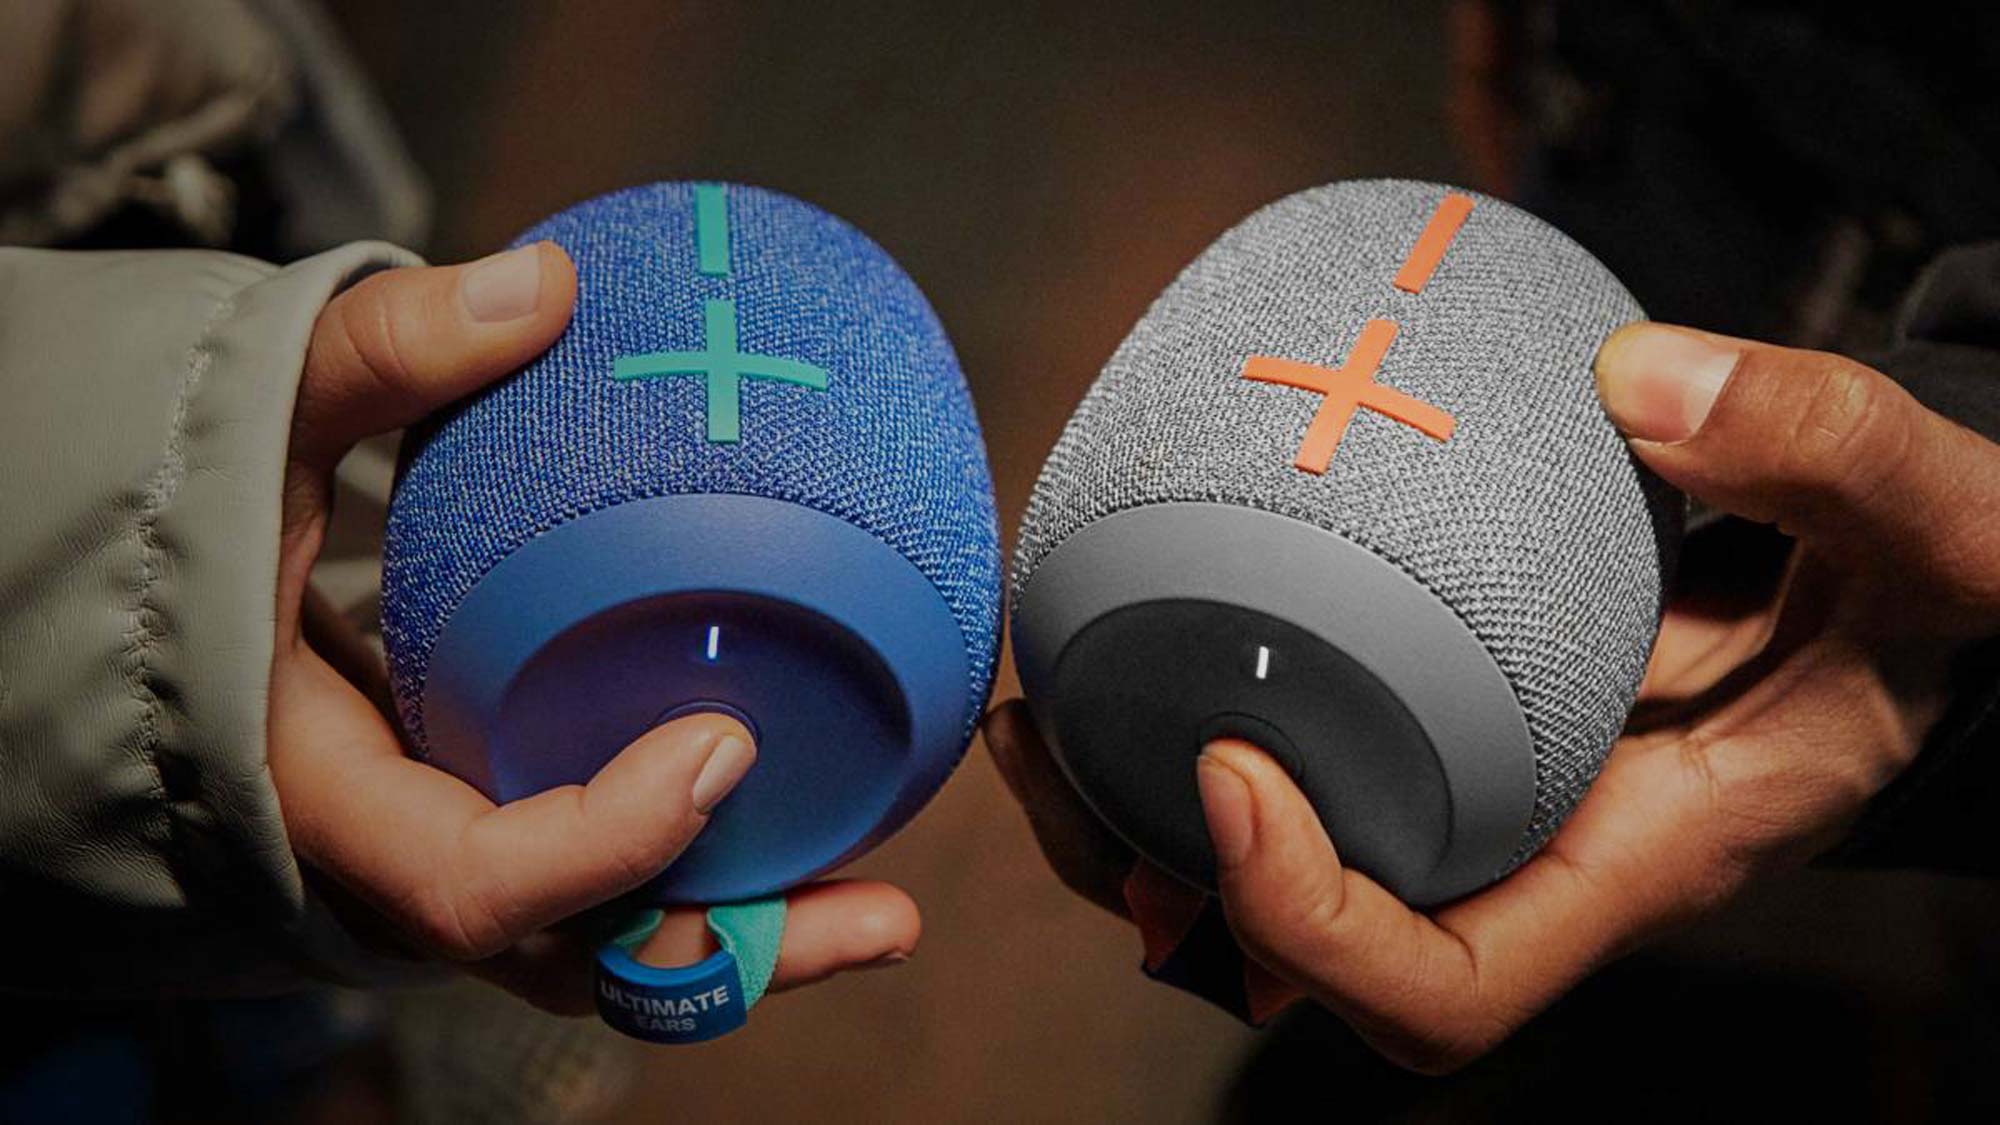 UE Wonderboom 2 Review: This $100 Bluetooth Speaker Packs a Big Punch |  Tom's Guide